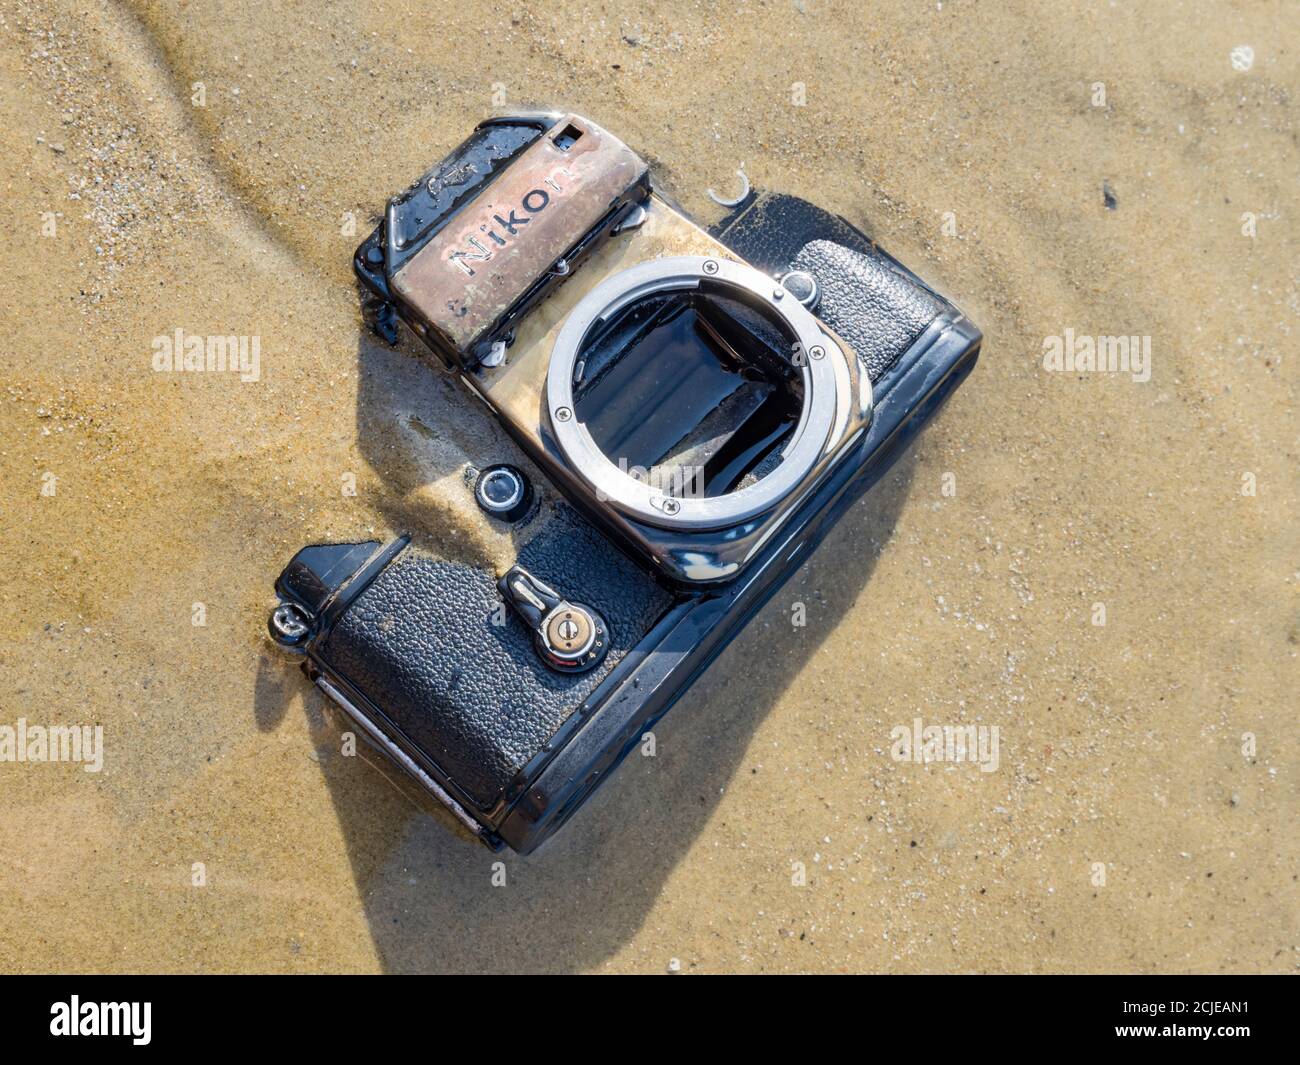 Nikon retro classic SLR film camera on beach rub rubbed down surface and waterlogged Stock Photo